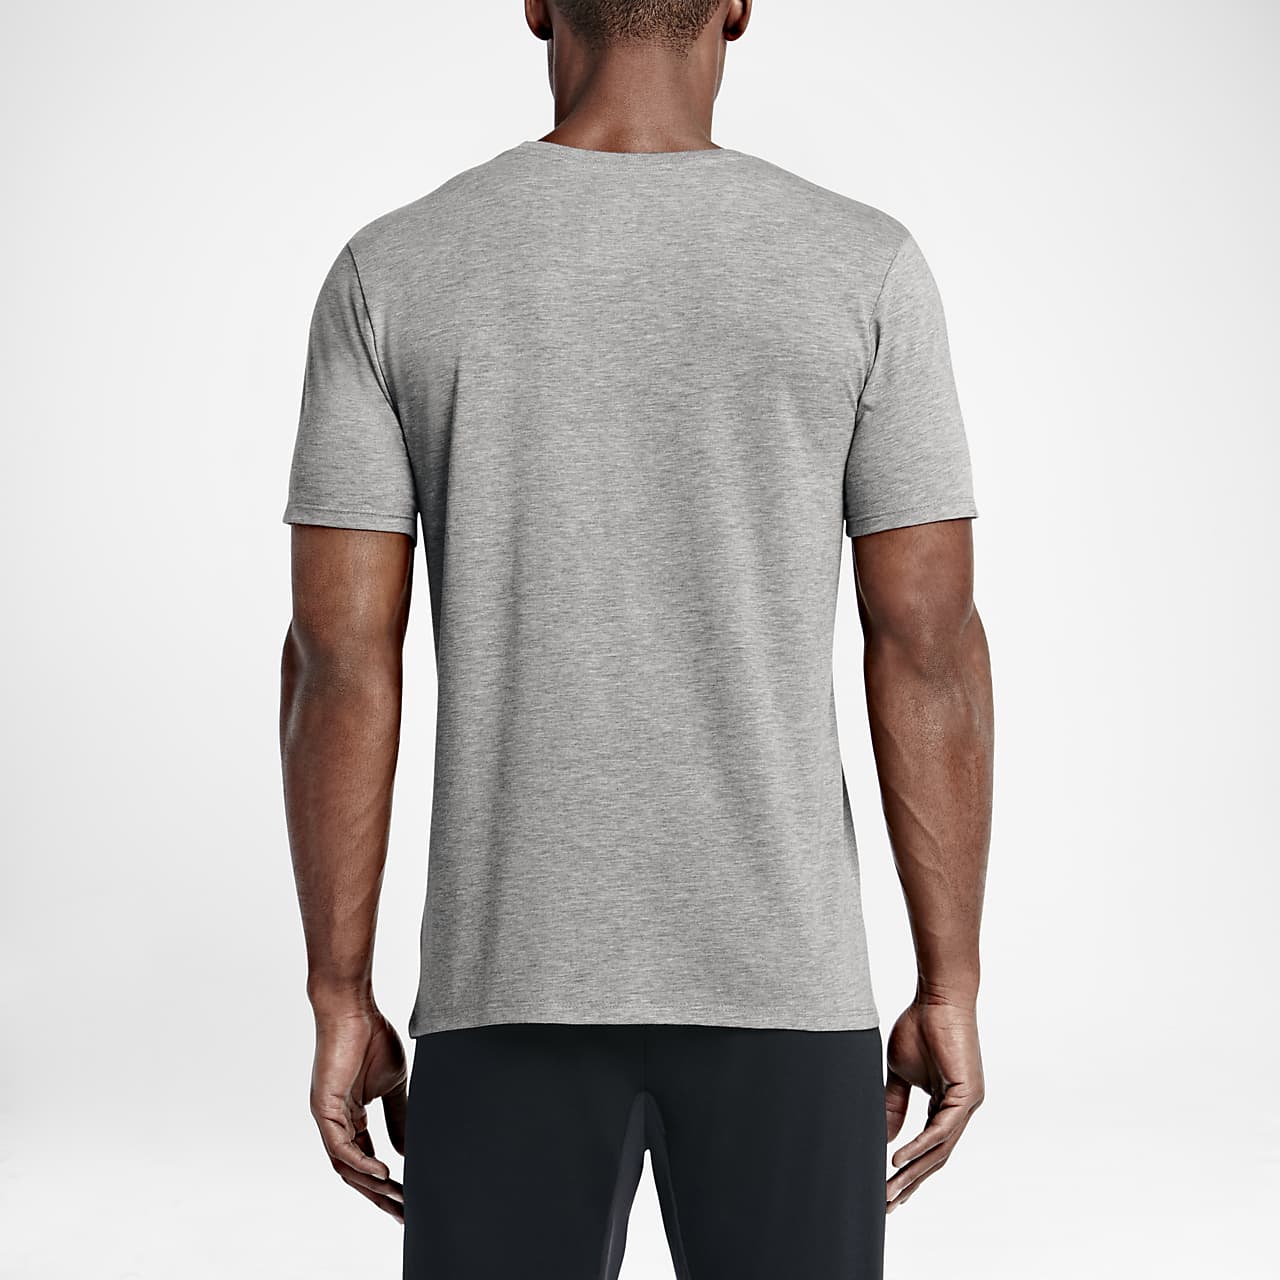 Nike Swoosh Athlete Men's T-Shirt. Nike HR